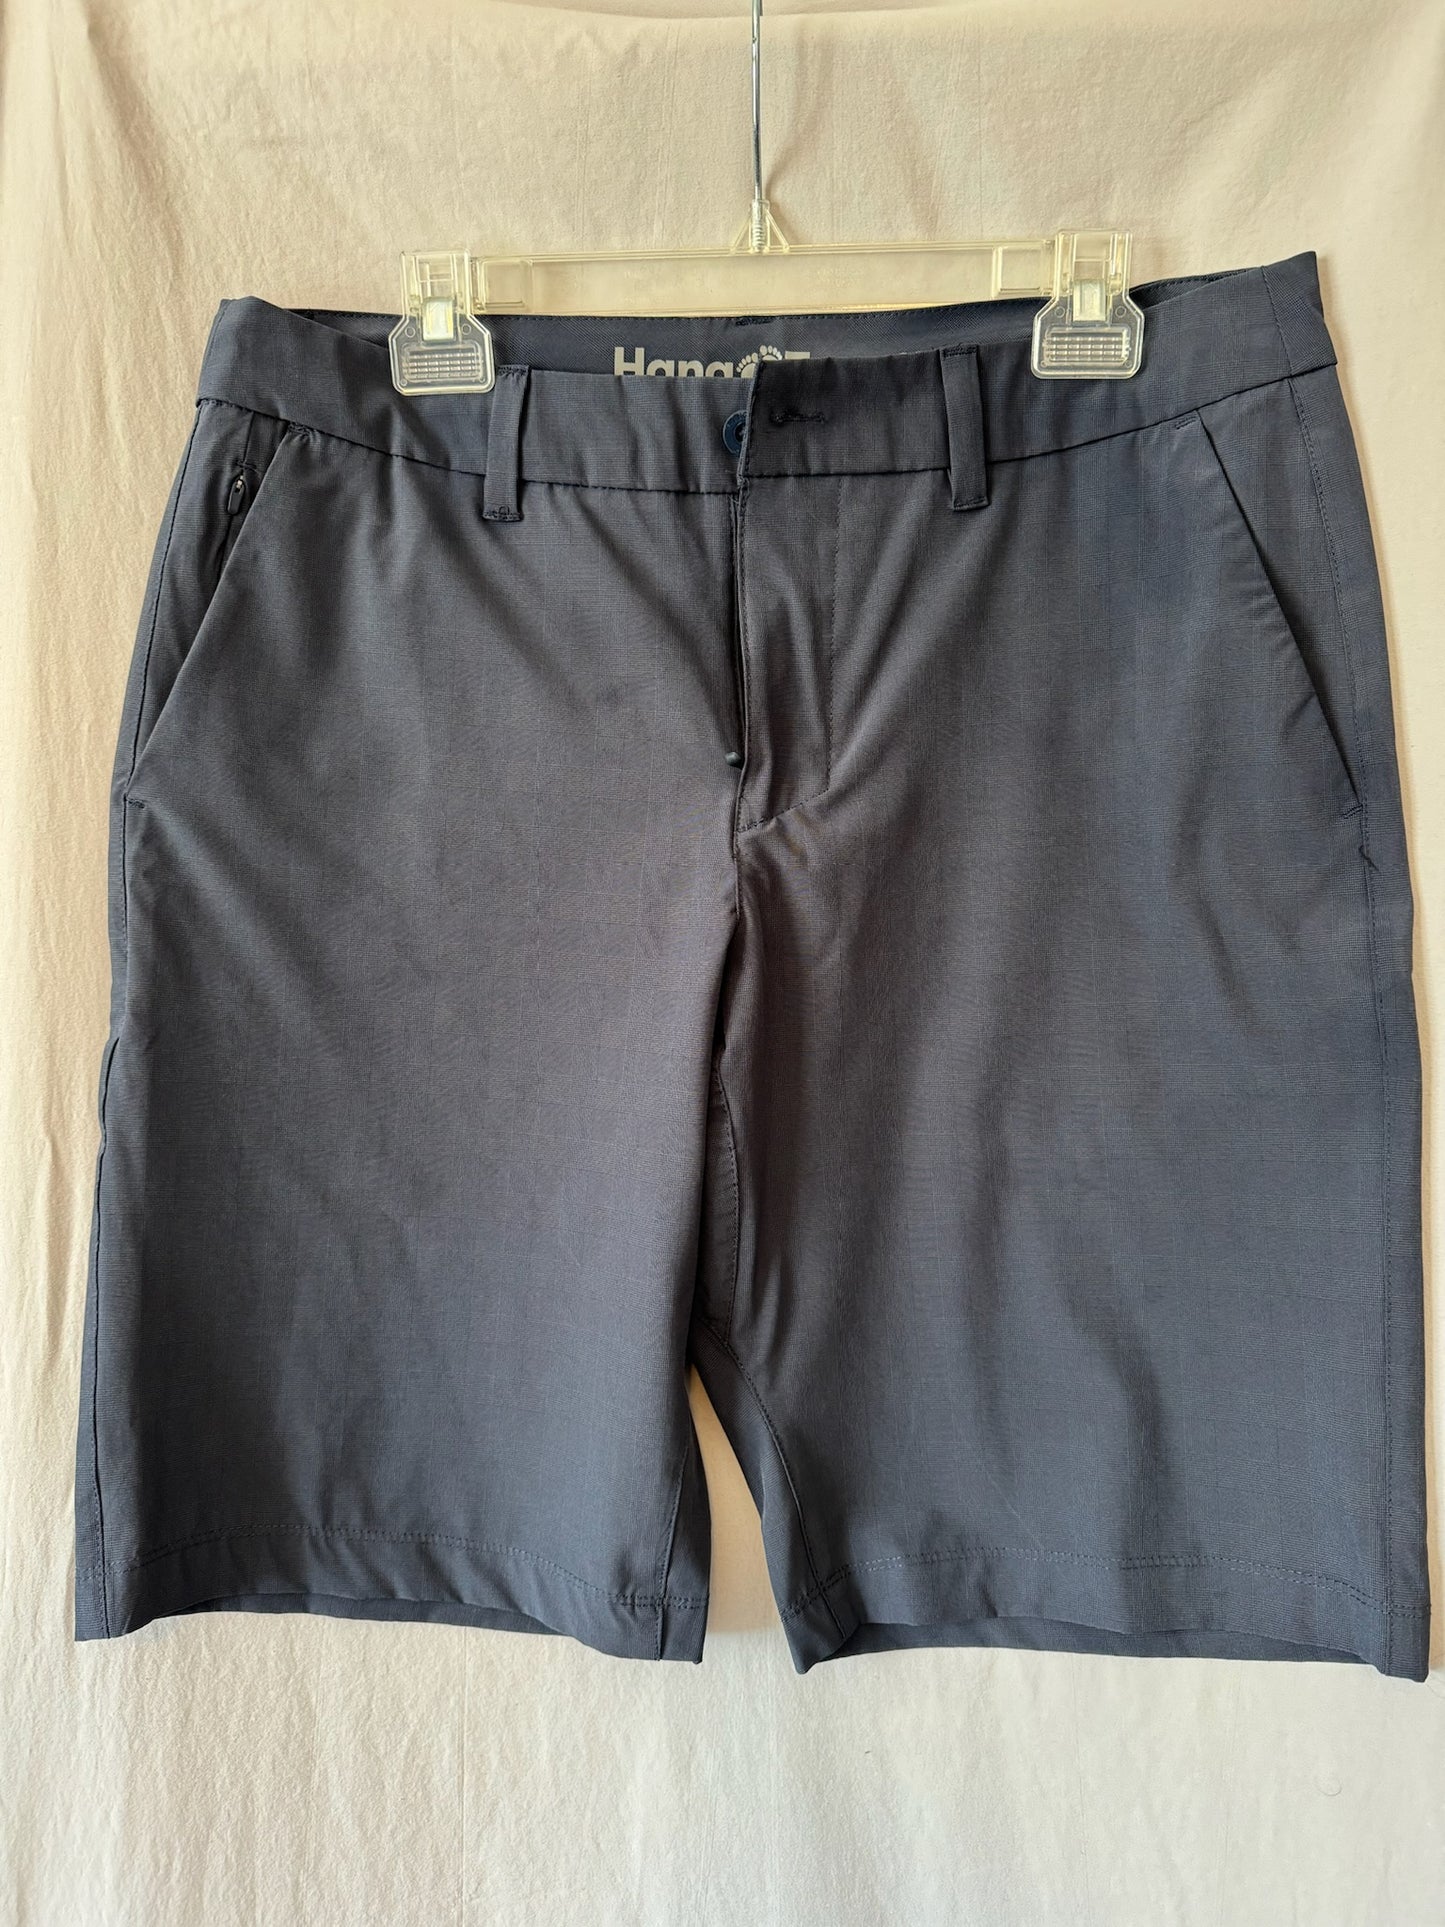 Men’s Blue Gray Hang 10 Shorts Size 34inch Waist